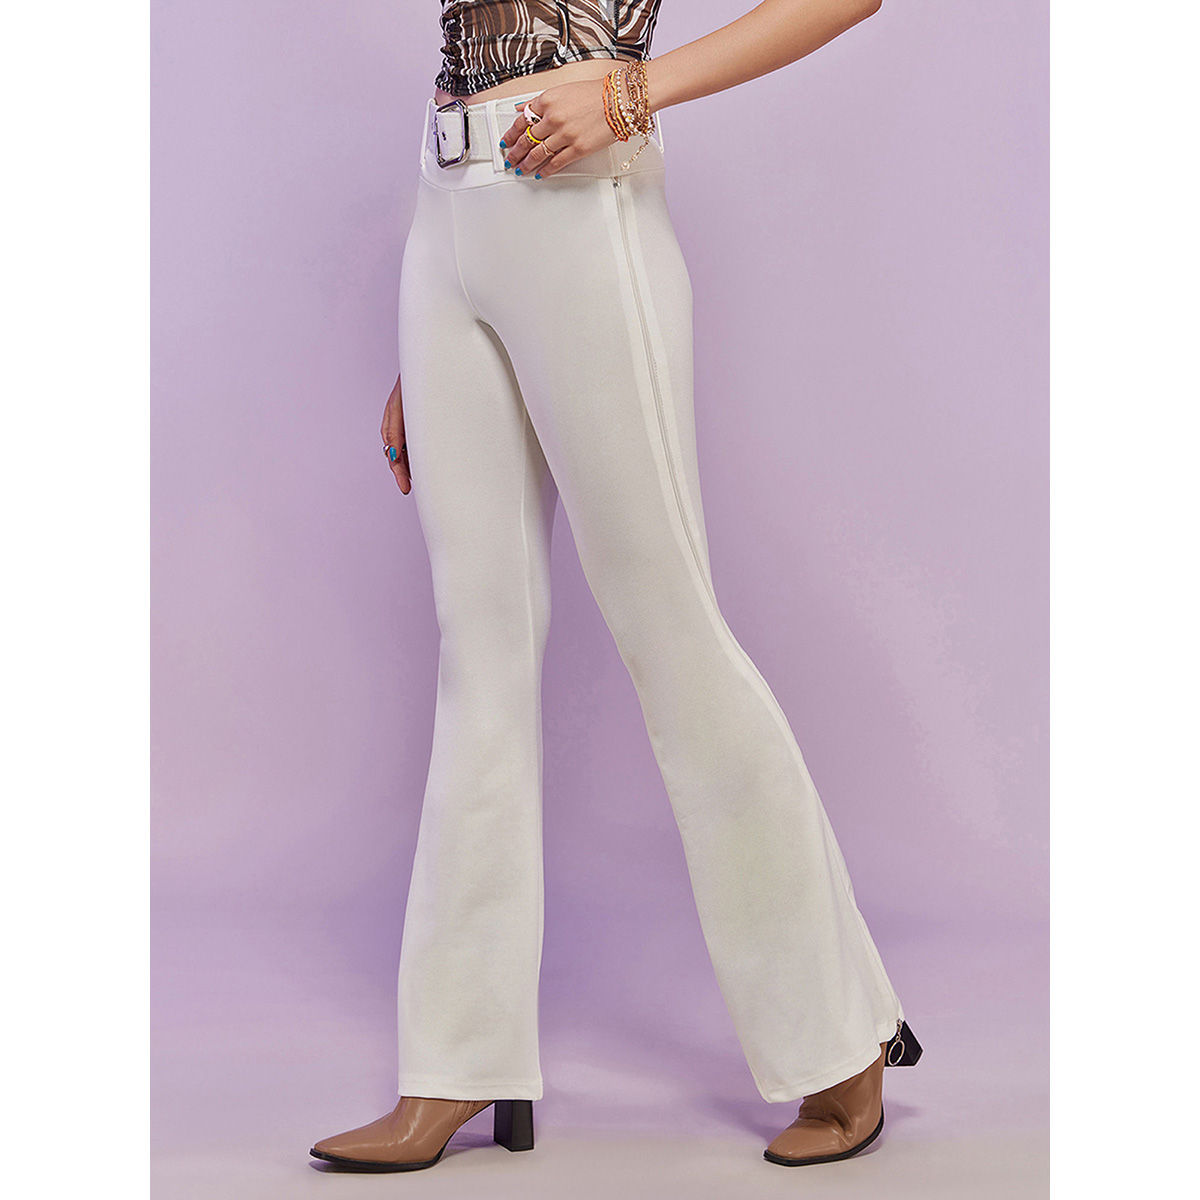 Buy FONMA Women Button Strap Pants Trousers Bell Bottom Pants High Waist  Zipper Jeans XXLarge White at Amazonin